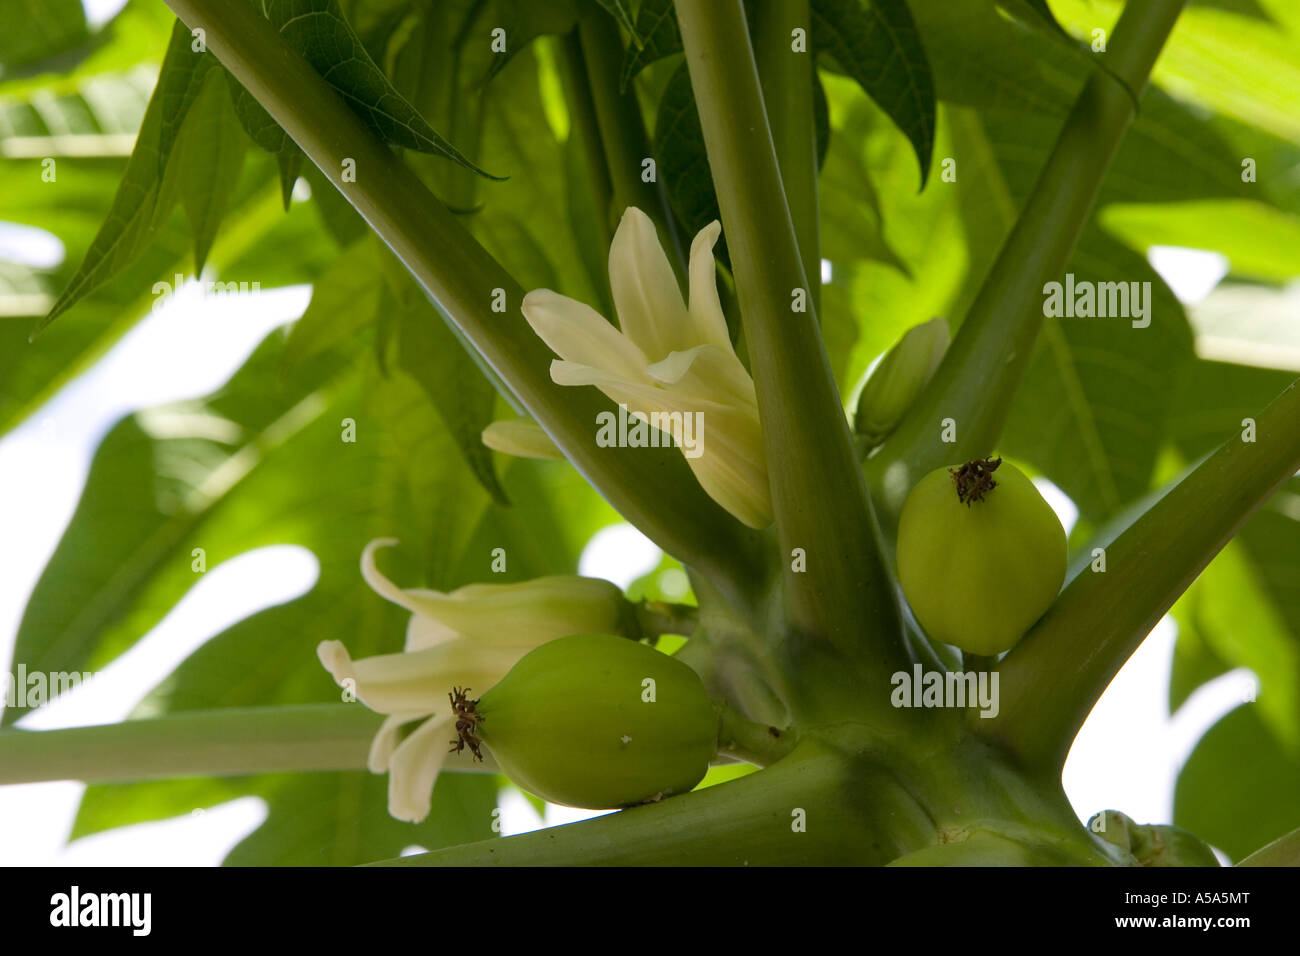 Carica papaya flowers and juvenile fruits Stock Photo